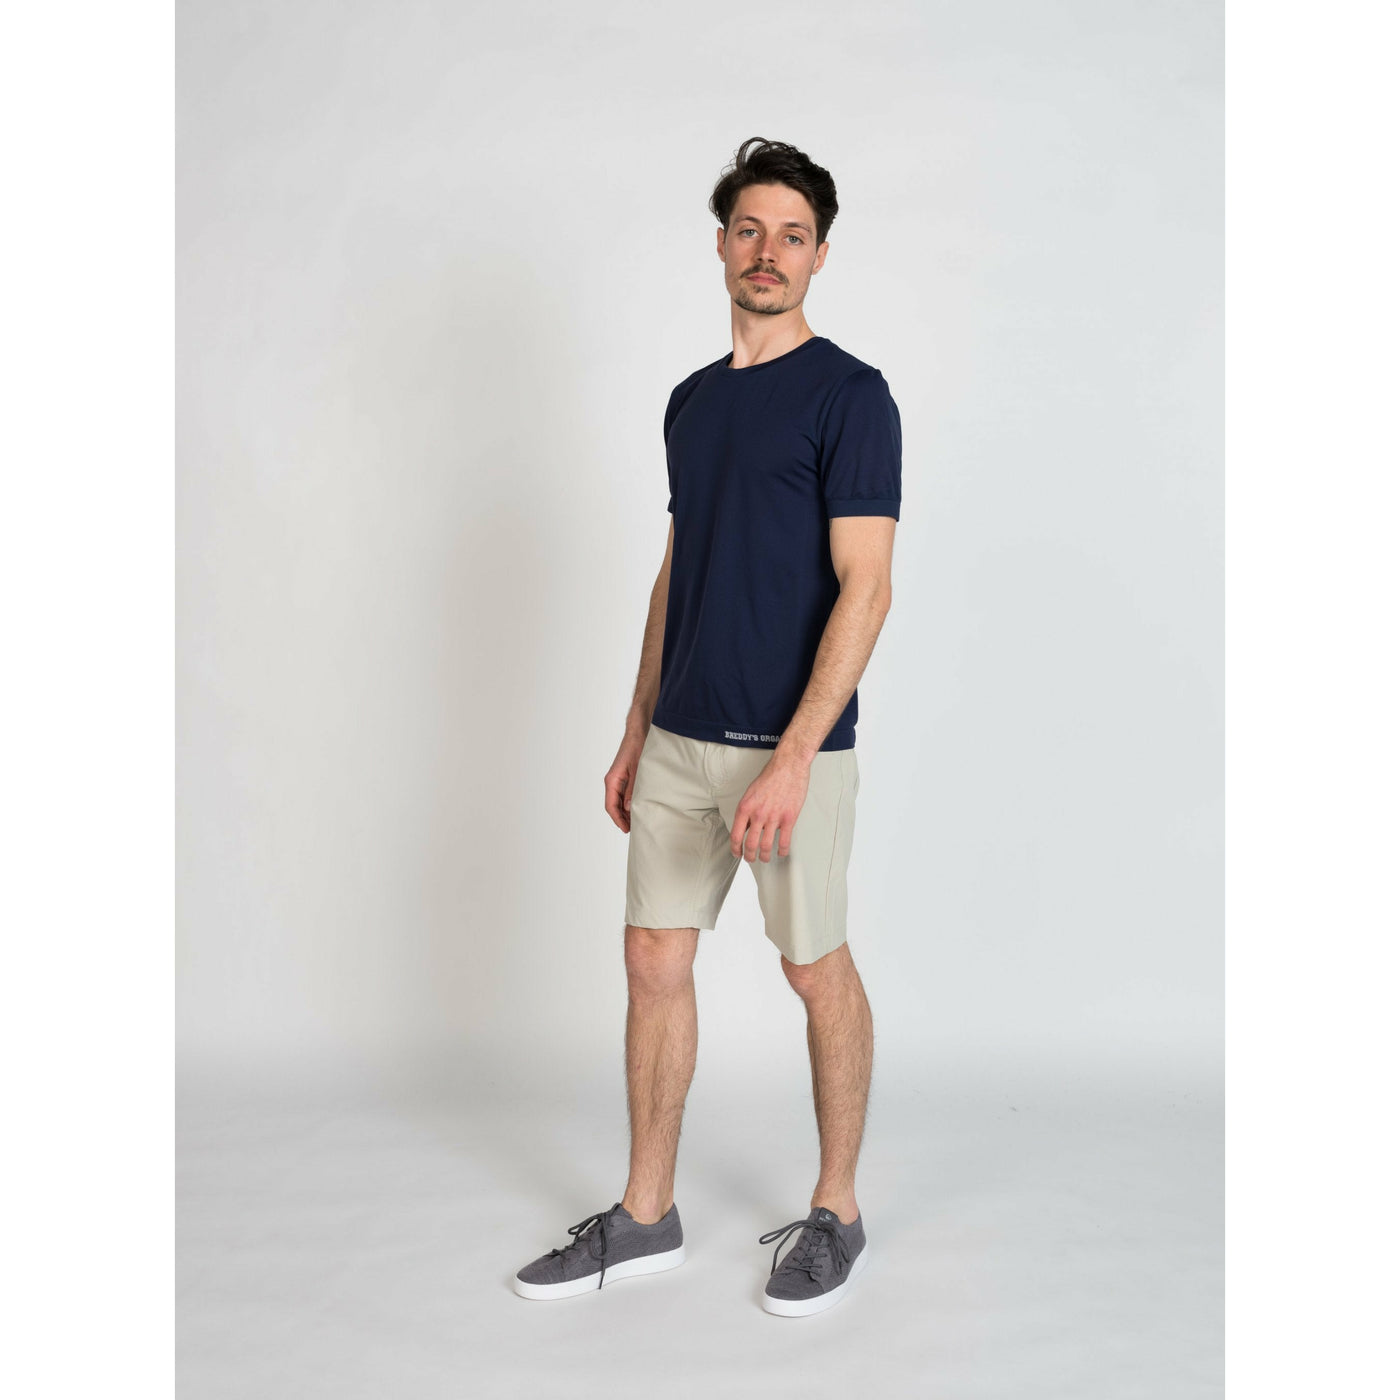 BREDDY'S - shorts New York Basic #farbe_sand